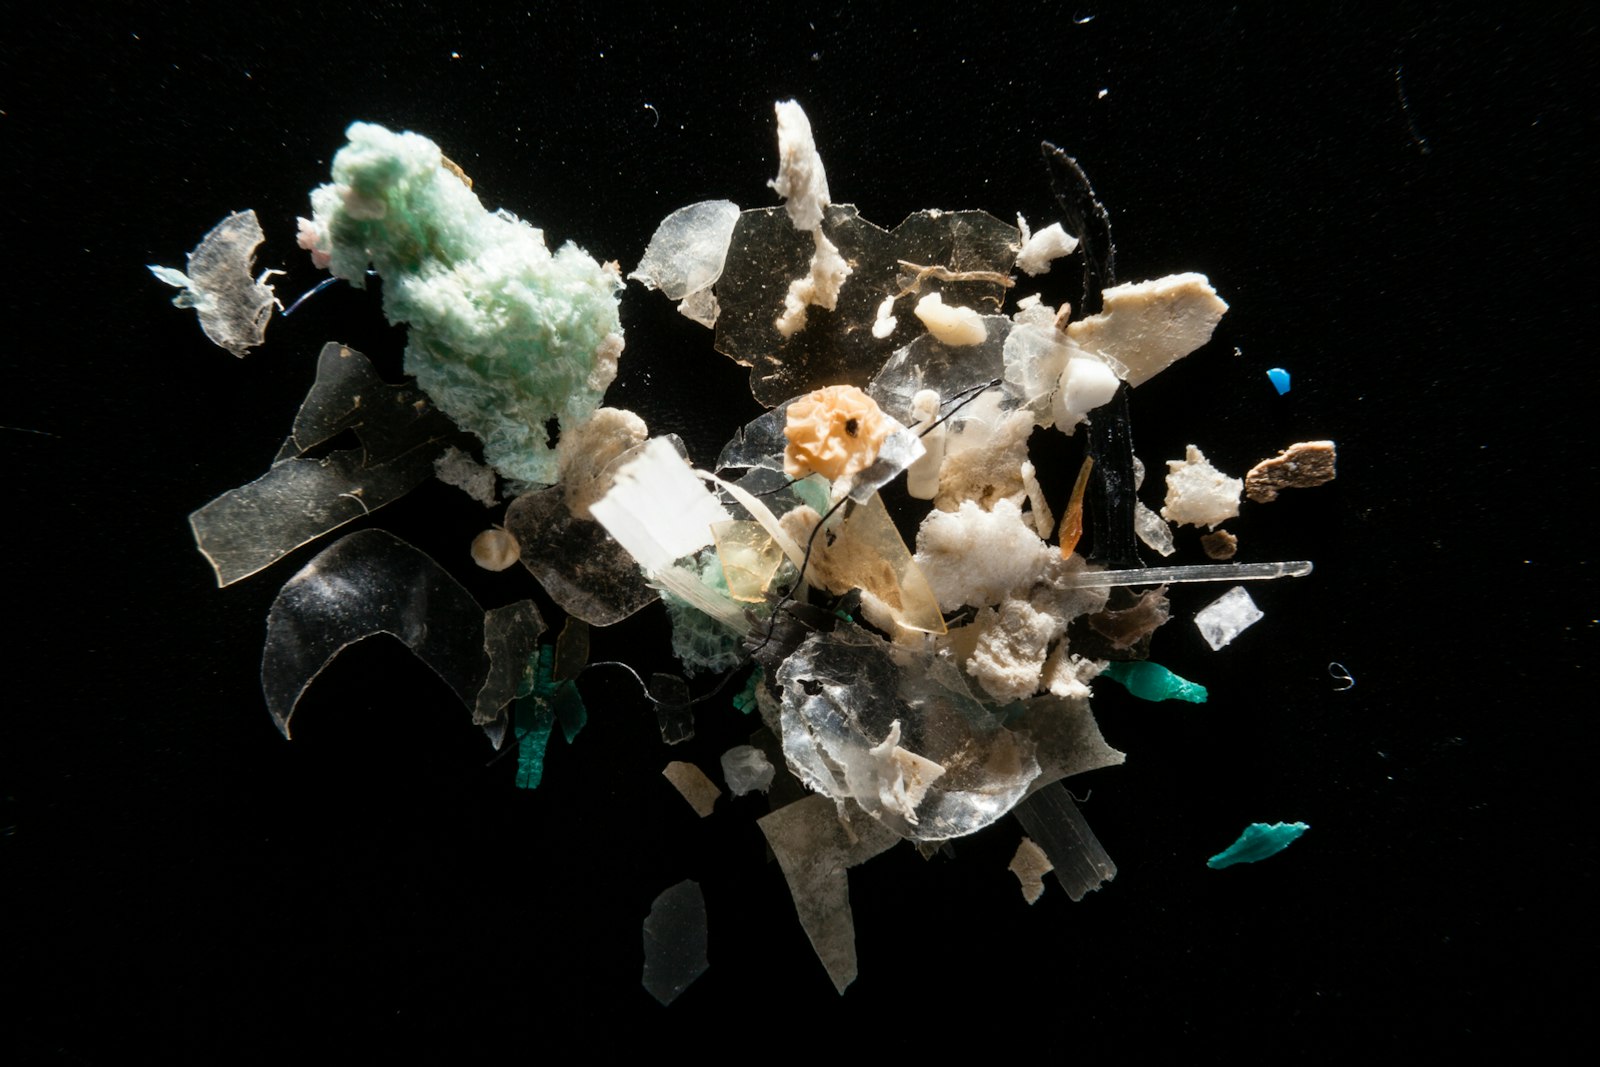 Pieces of microplastics